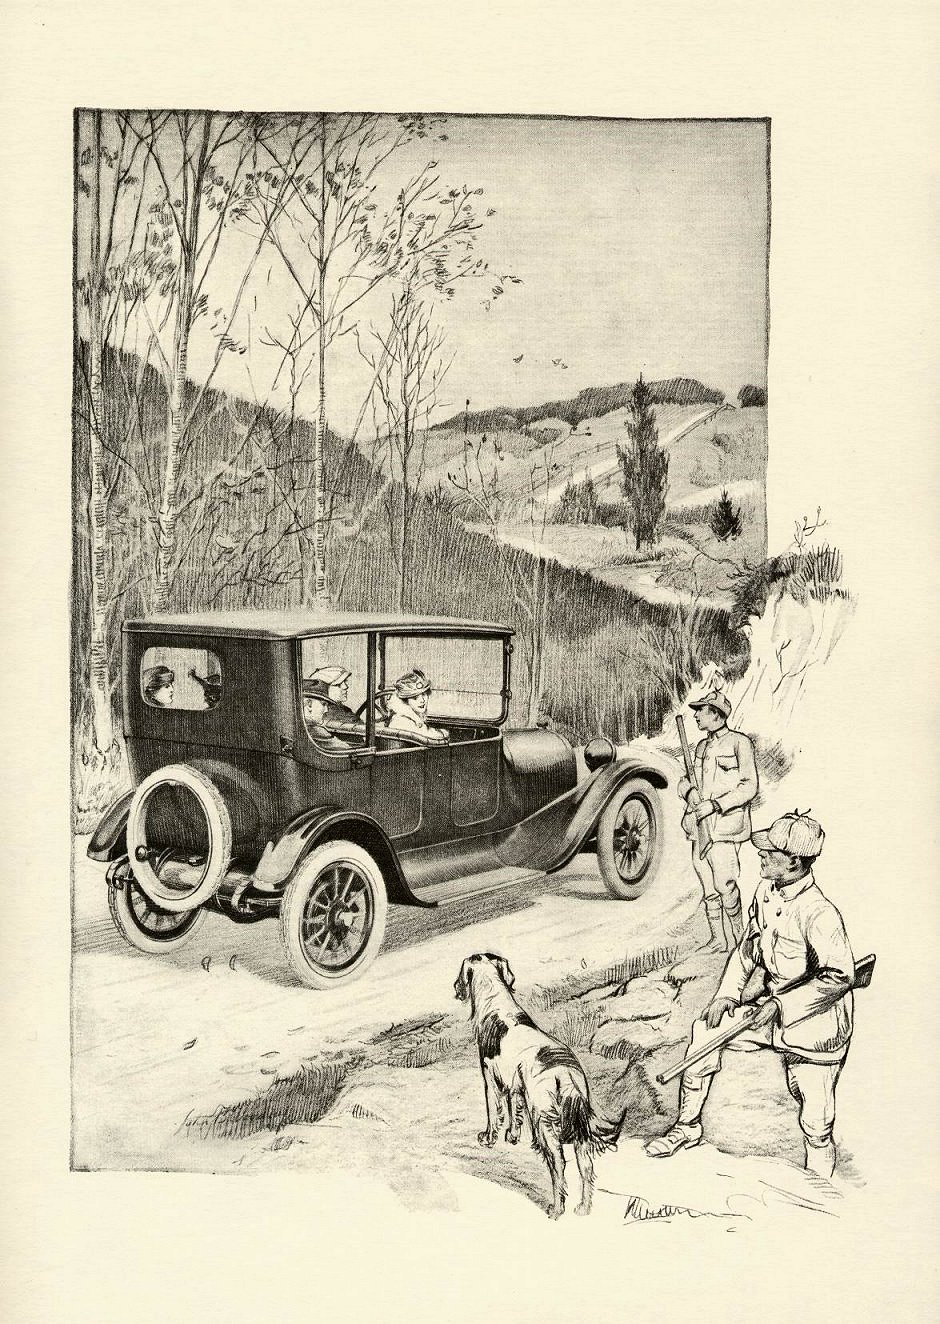 1920 Dodge Brothers-12